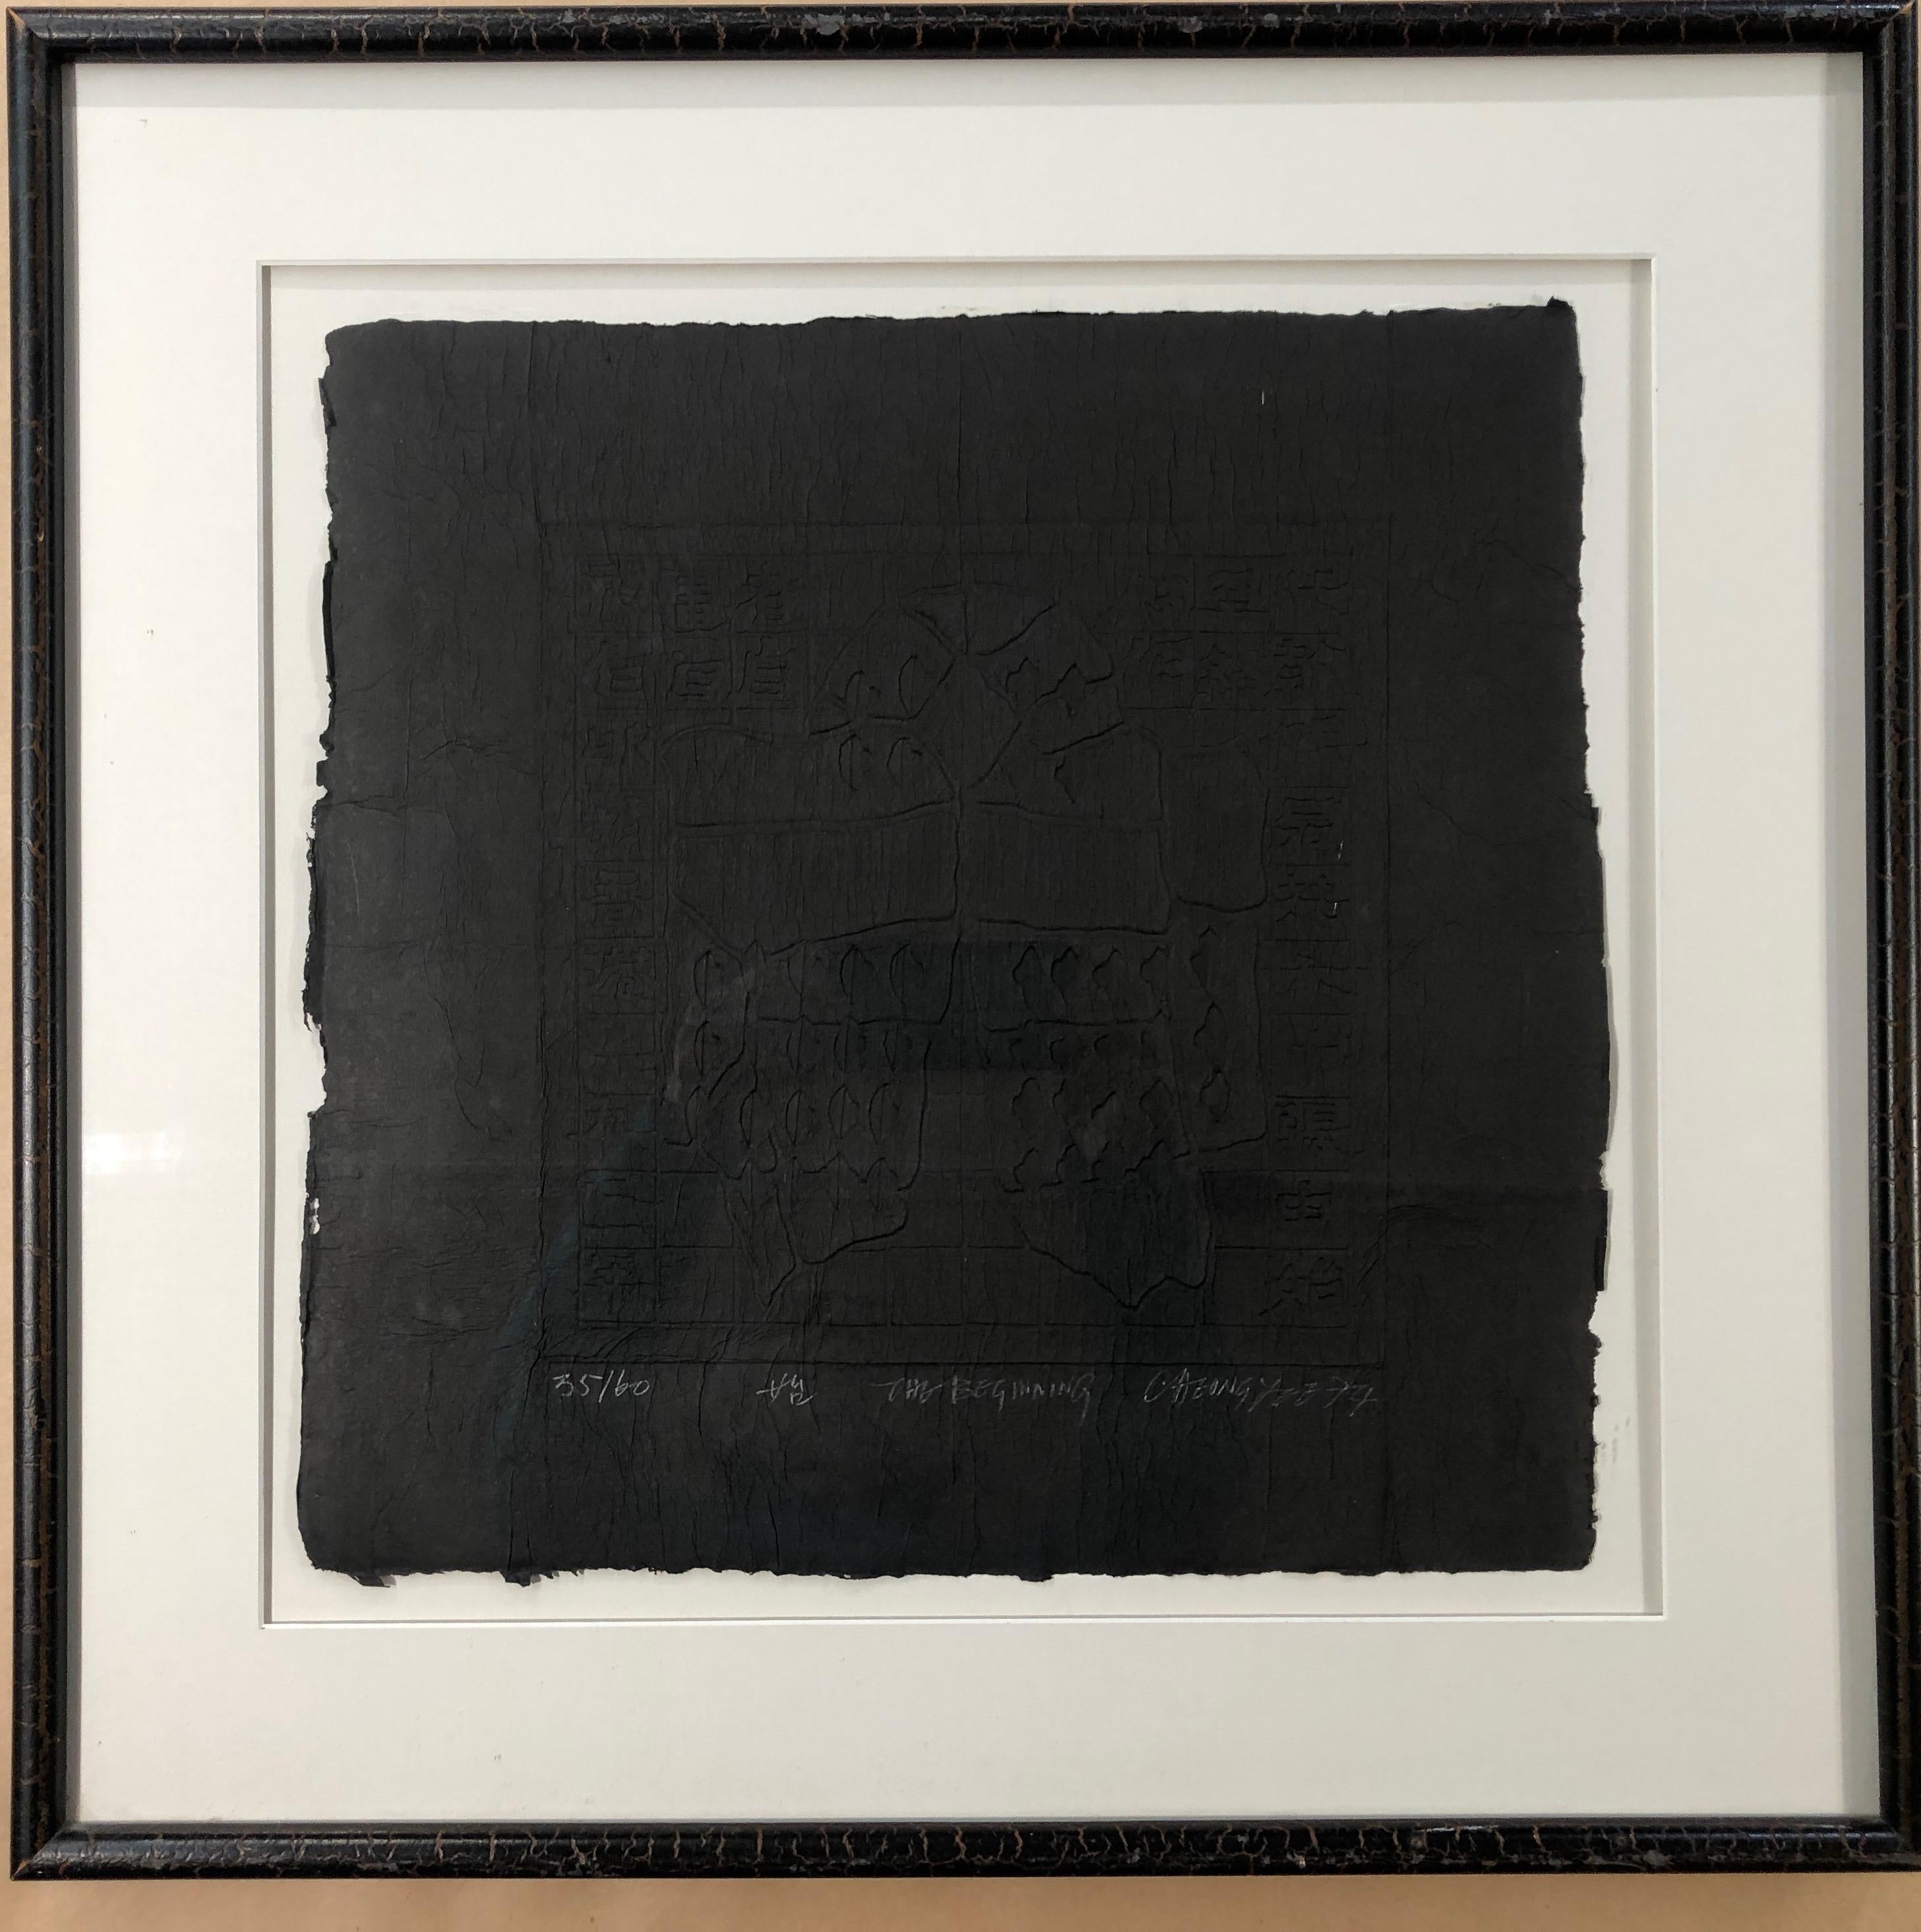 Cheung Yee  (Zhang Yi) Abstract Sculpture - The Beginning, 2021, cast paper, framed sculpture, black, Chinese text